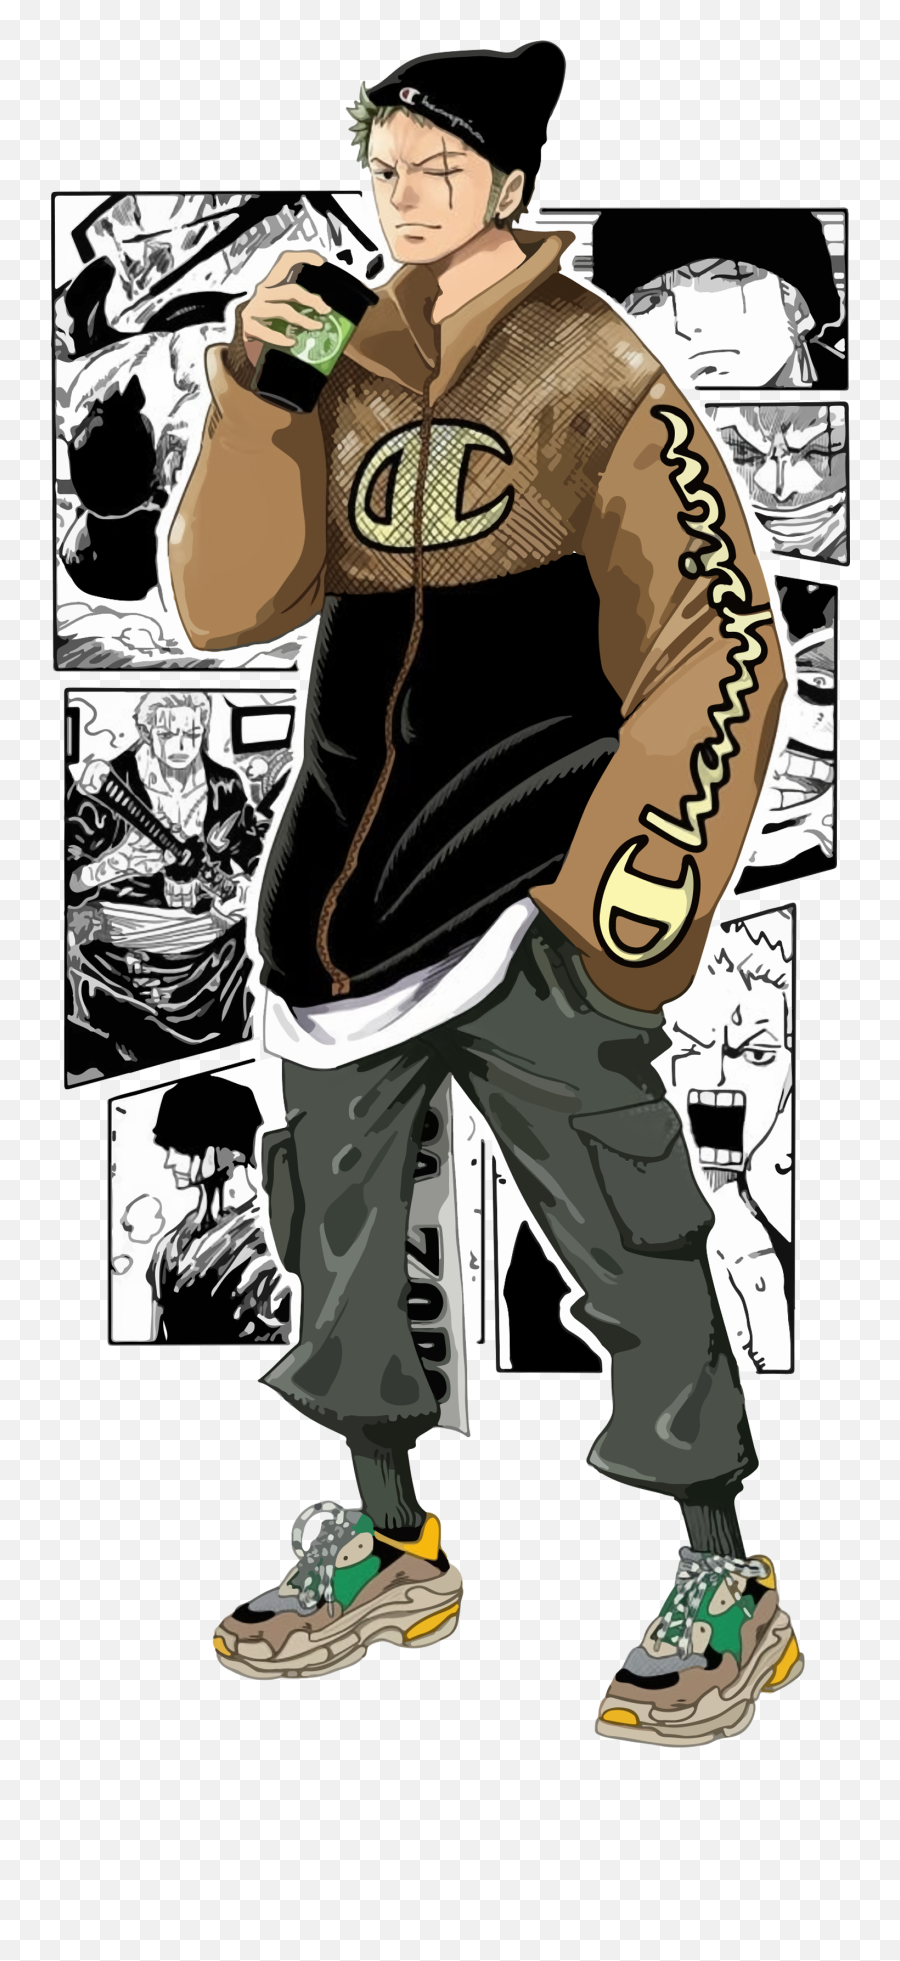 Japanese Manga Series Written - One Piece Street Style Png,Shonen Jump Logo